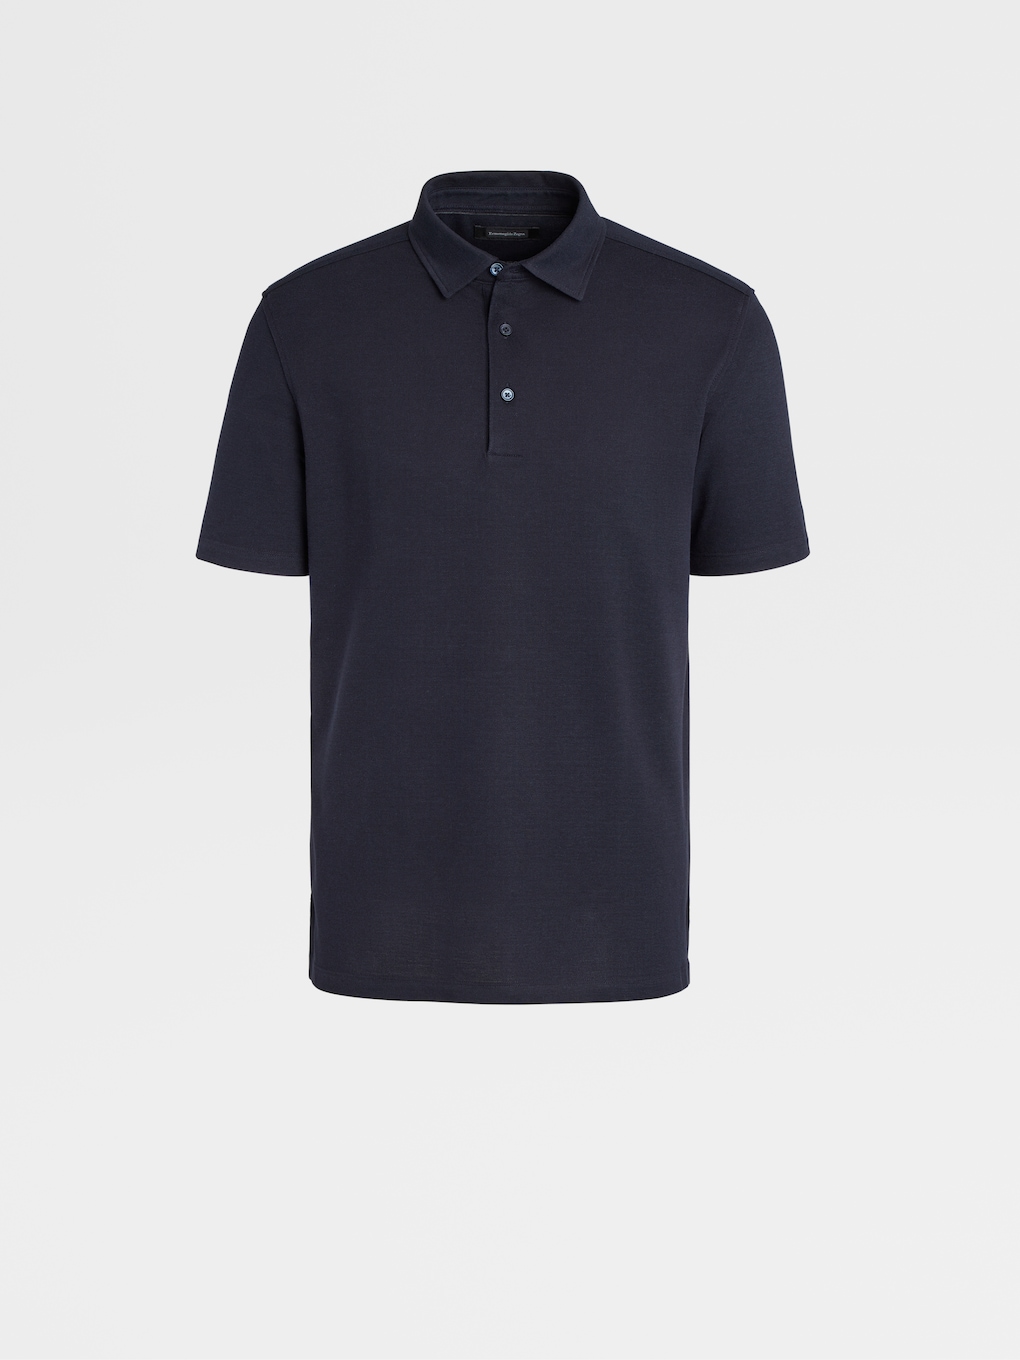 Z Zenga Men's 100% Cotton Regular Fit Blue Polo Shirt 